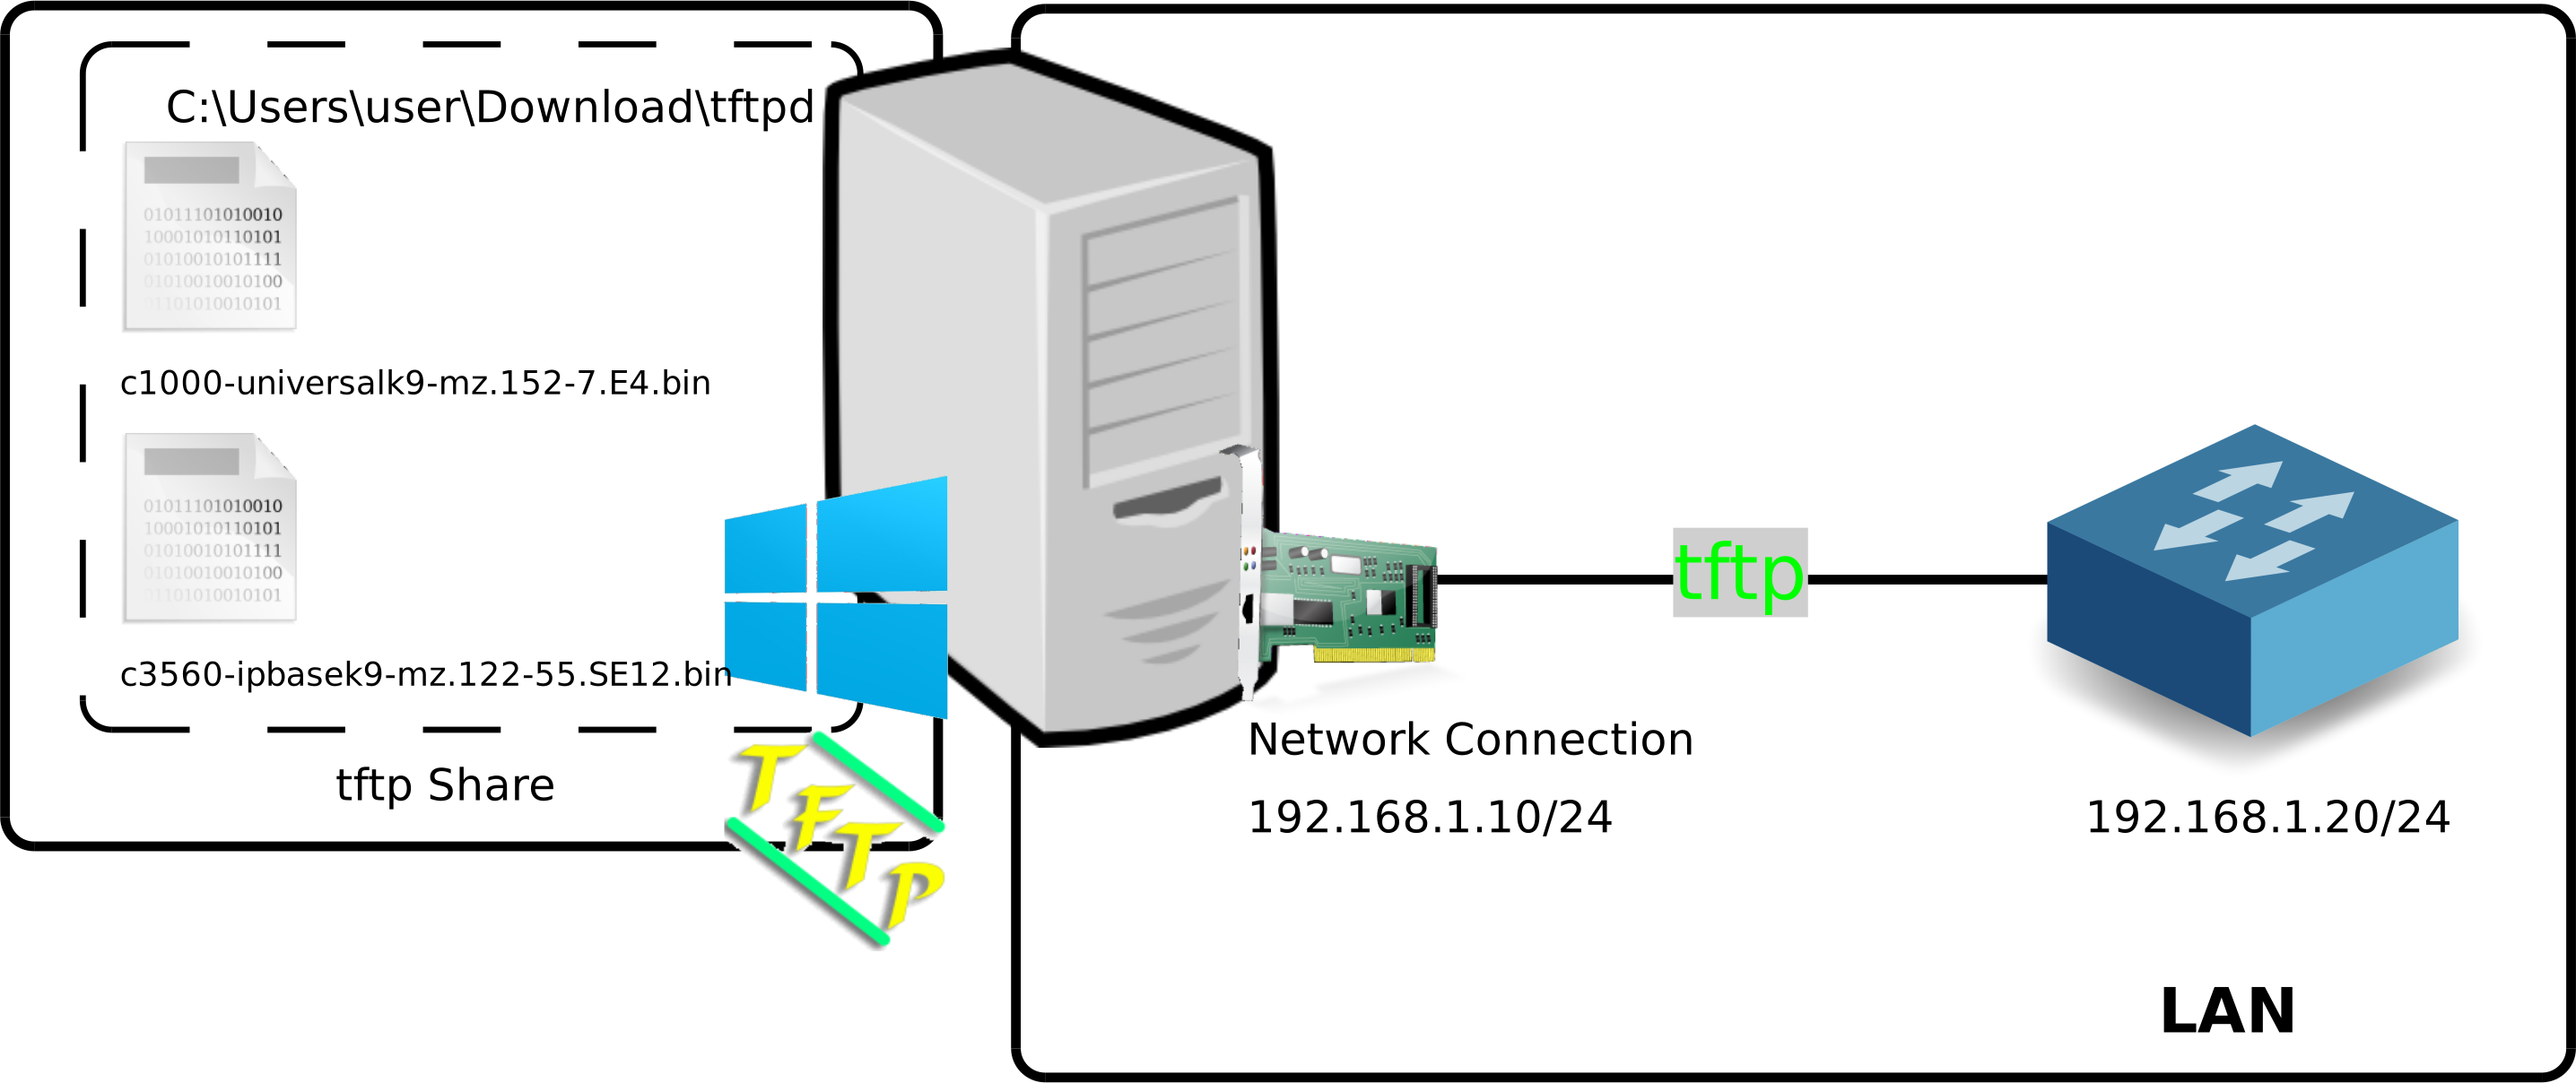 Windows | tftp server architecture